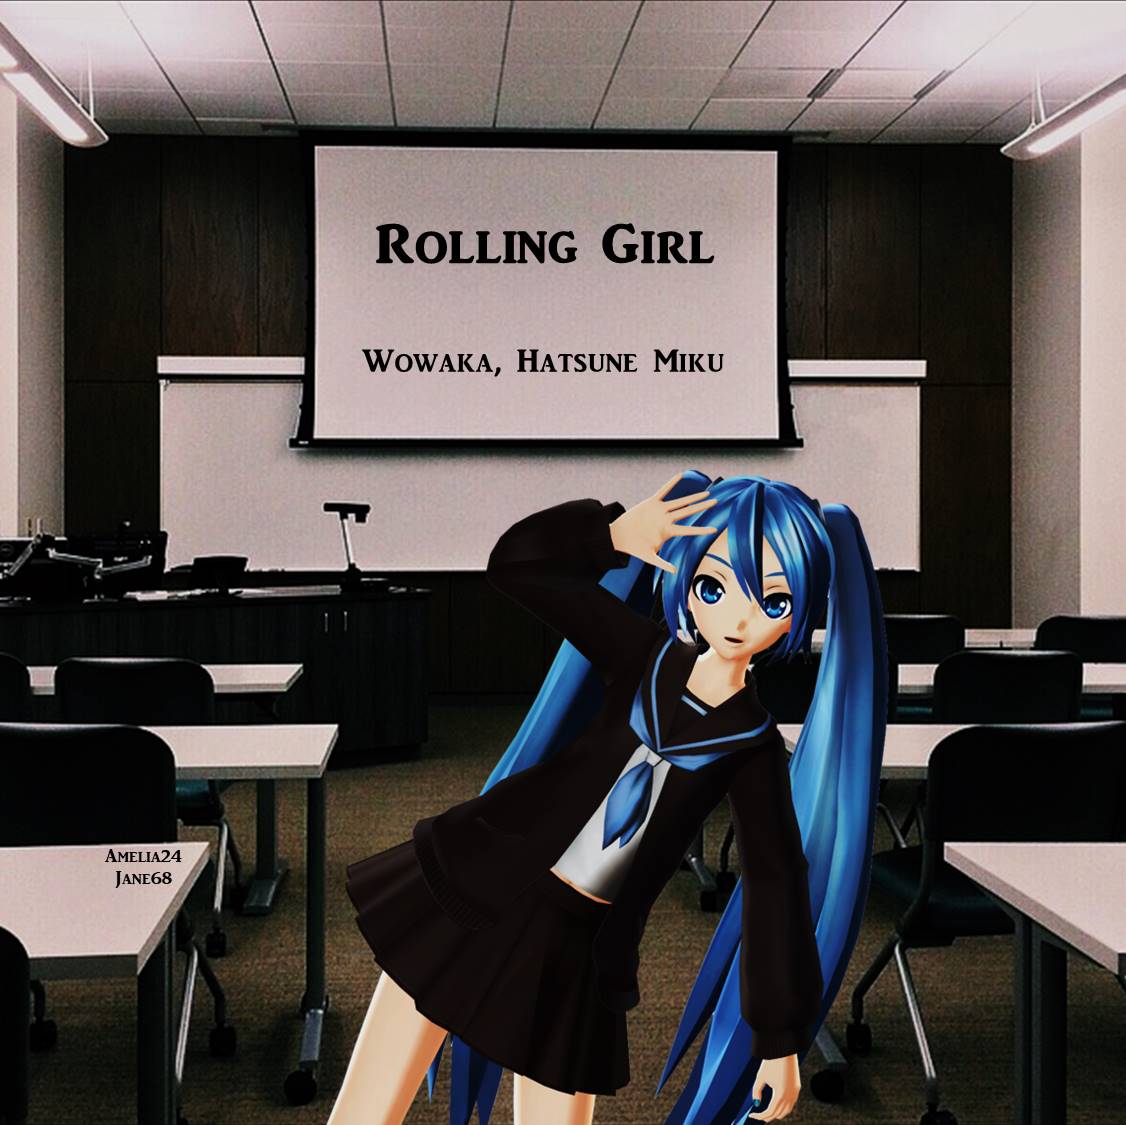  Rolling Girl sejak Wowaka, Hatsune Miku